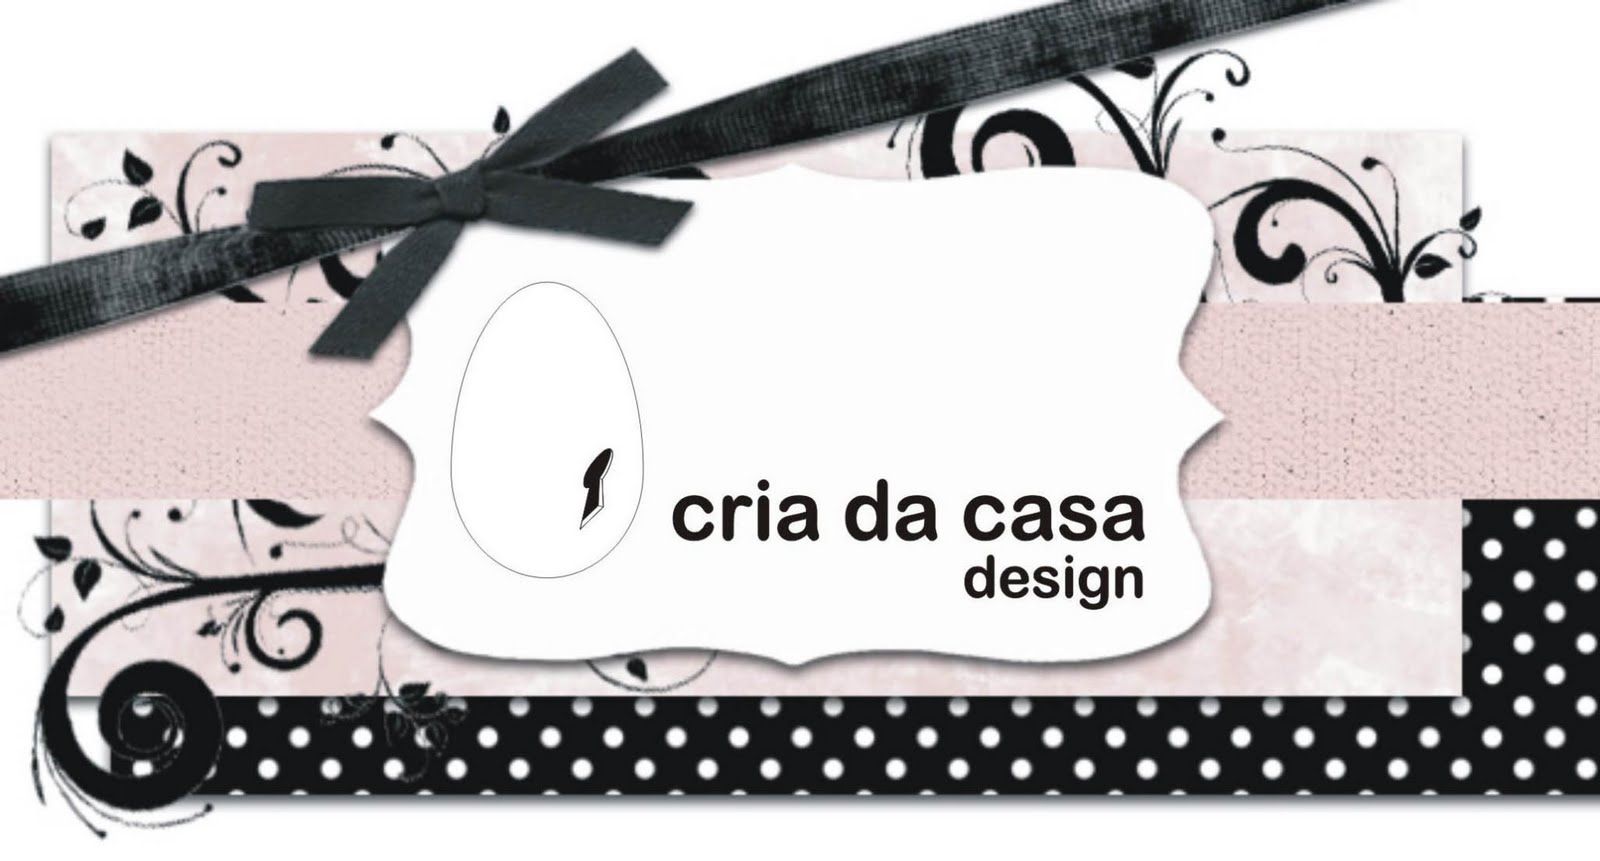 CRIA DA CASA DESIGN